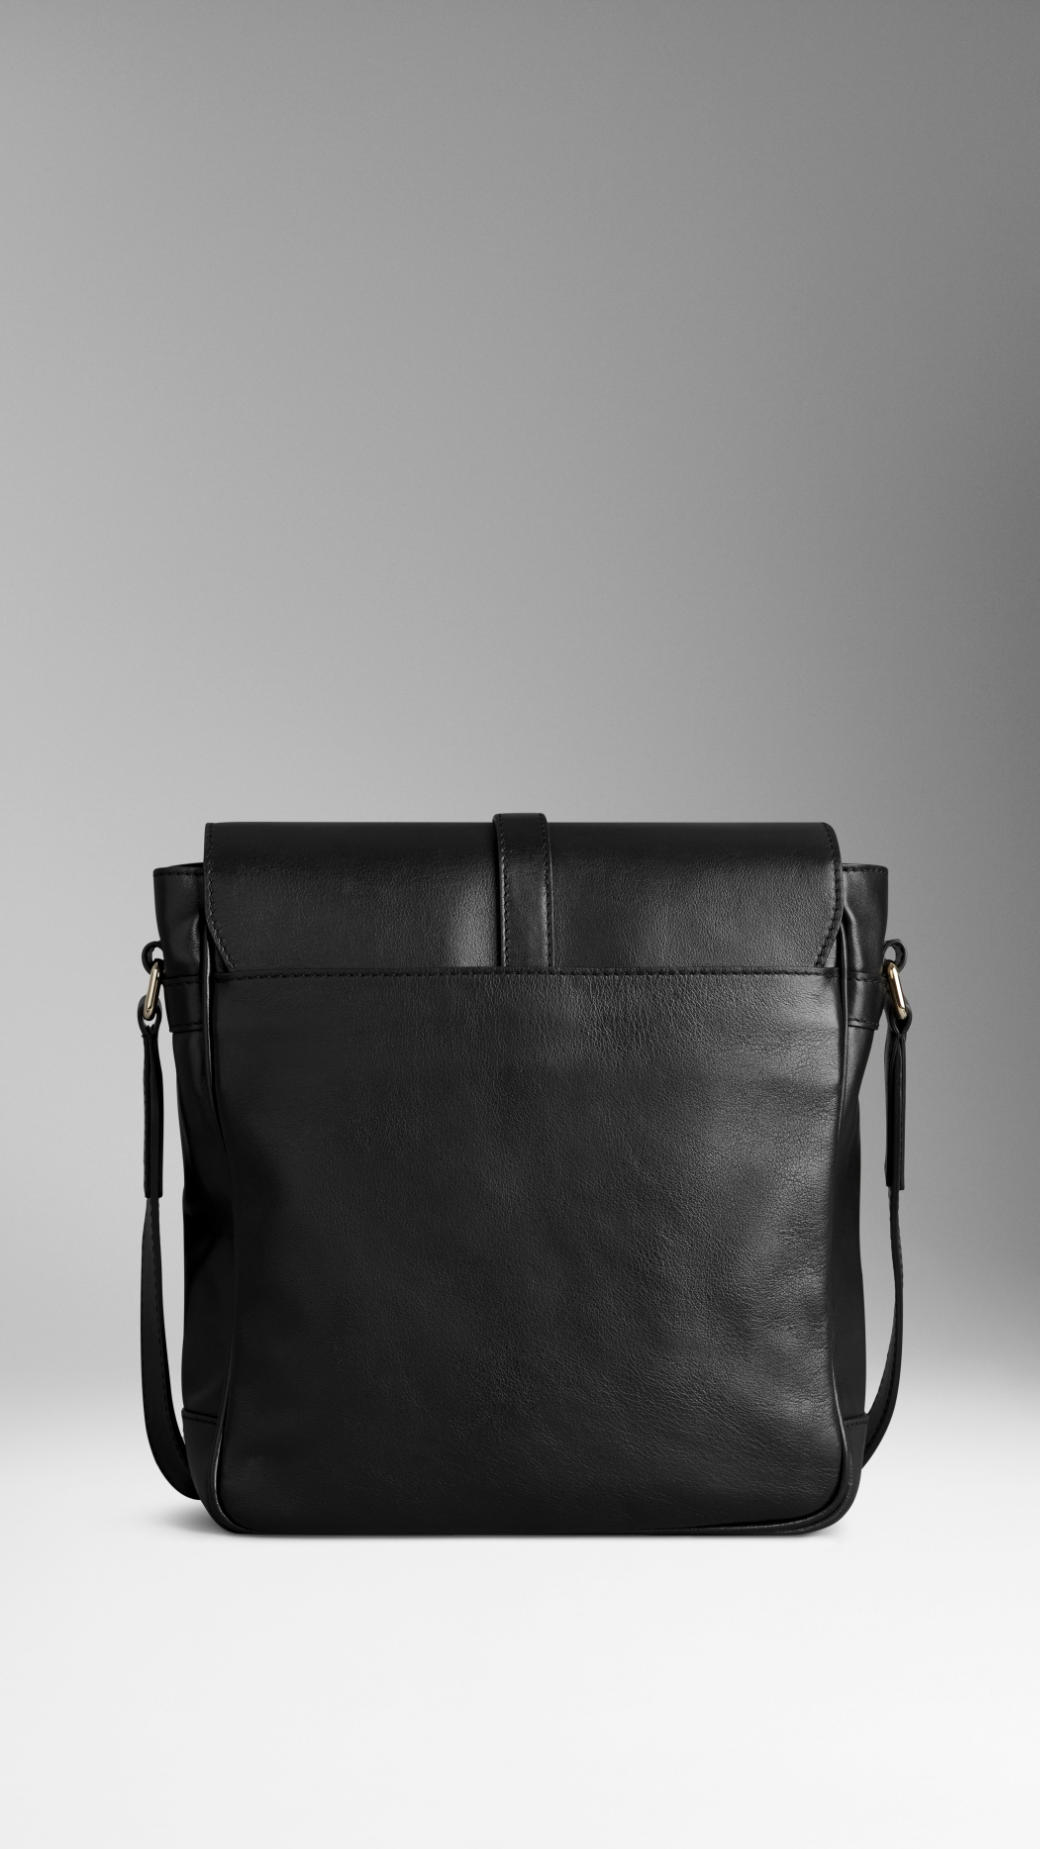 Burberry Soft Leather Crossbody Bag in Black for Men - Lyst